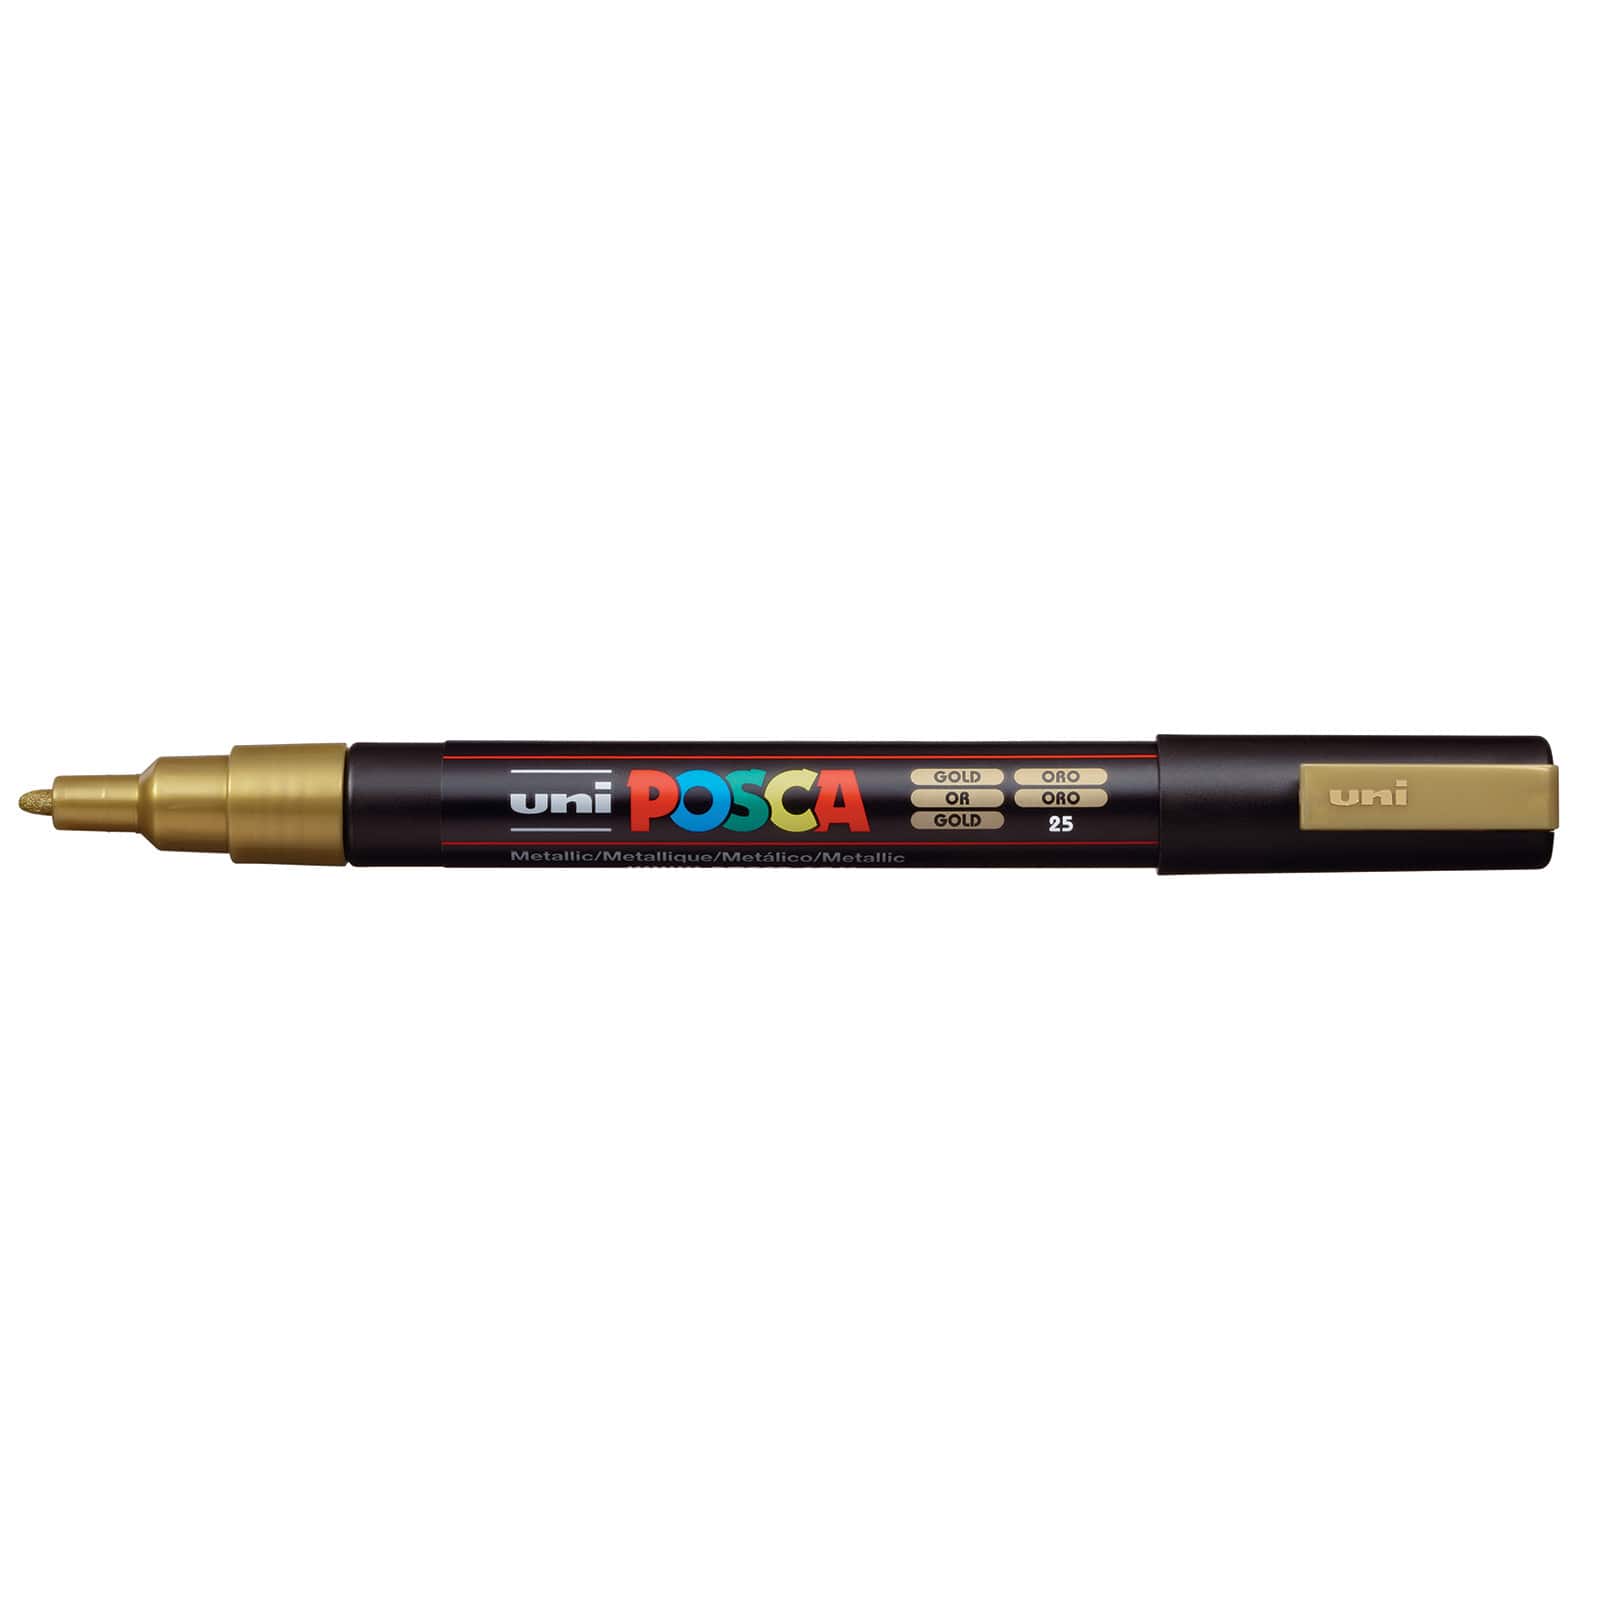 12 Pack: Uni Posca Fine Bullet Tip PC-3M Gold Paint Marker